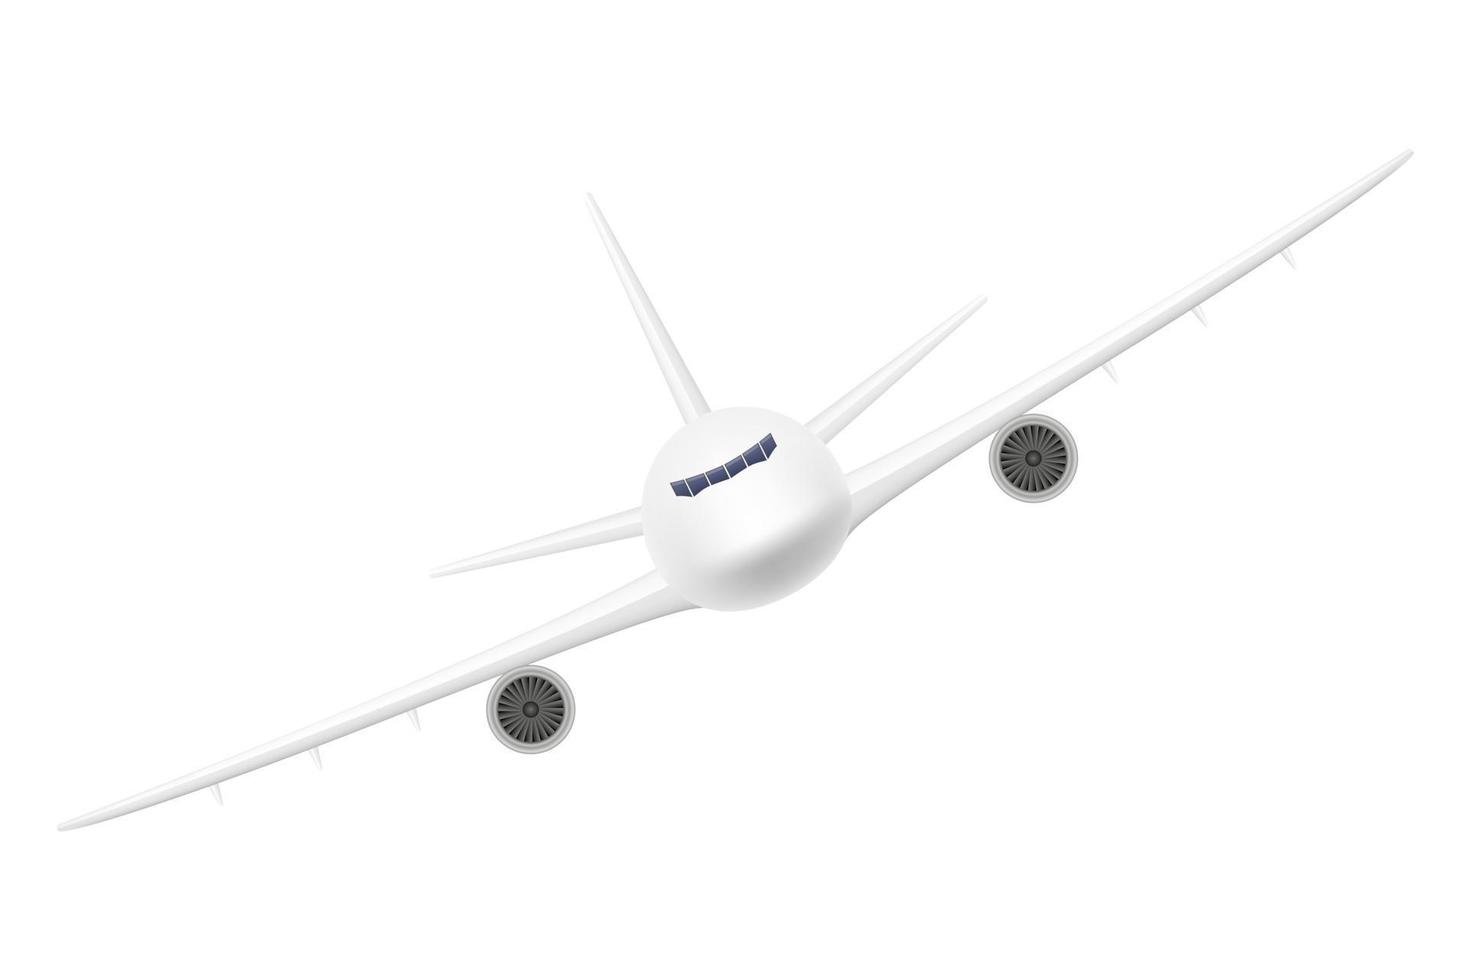 passenger airplane stock vector illustration isolated on white background